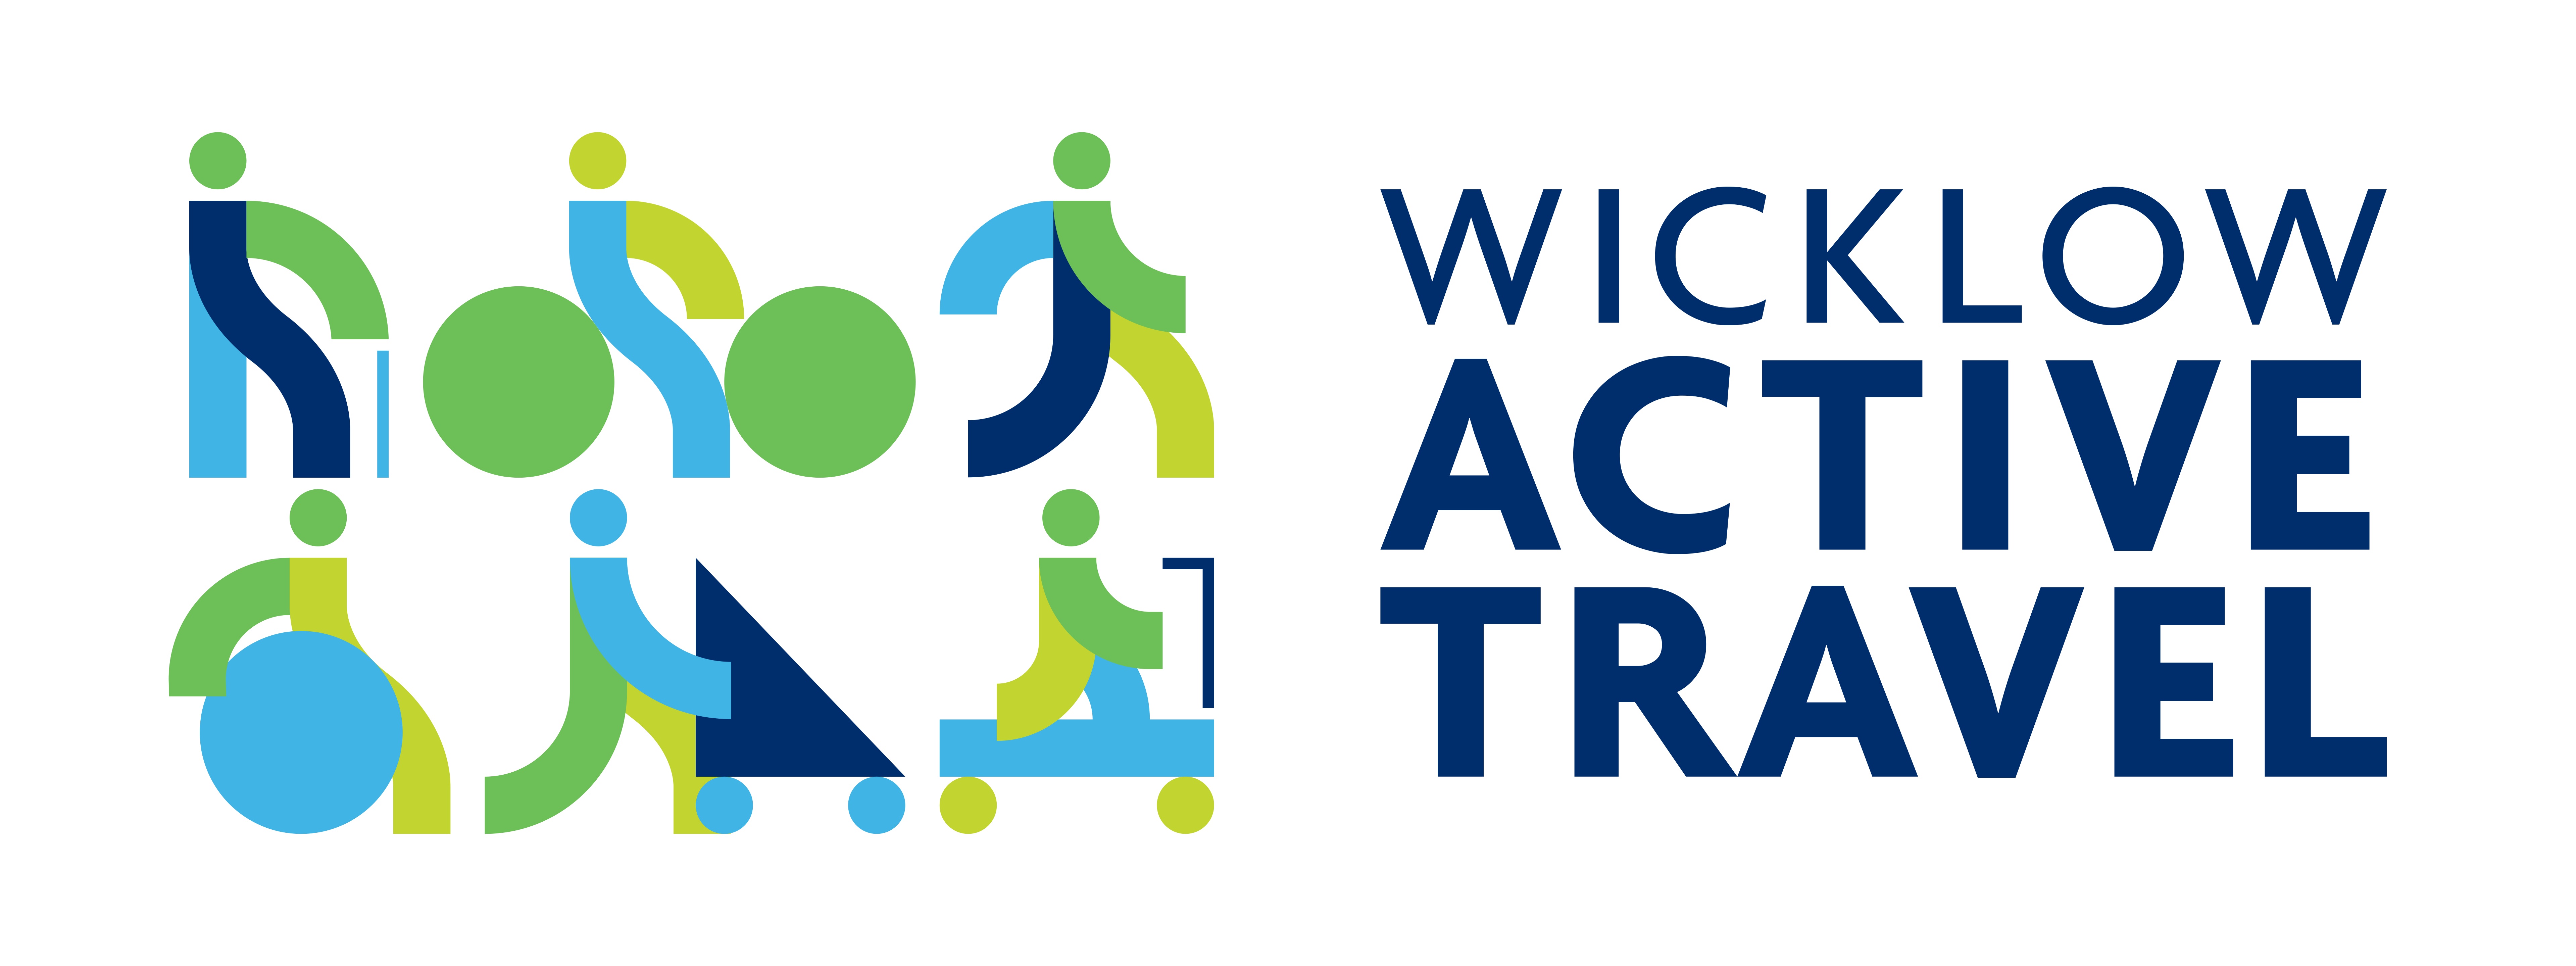 Wicklow Active Travel logo